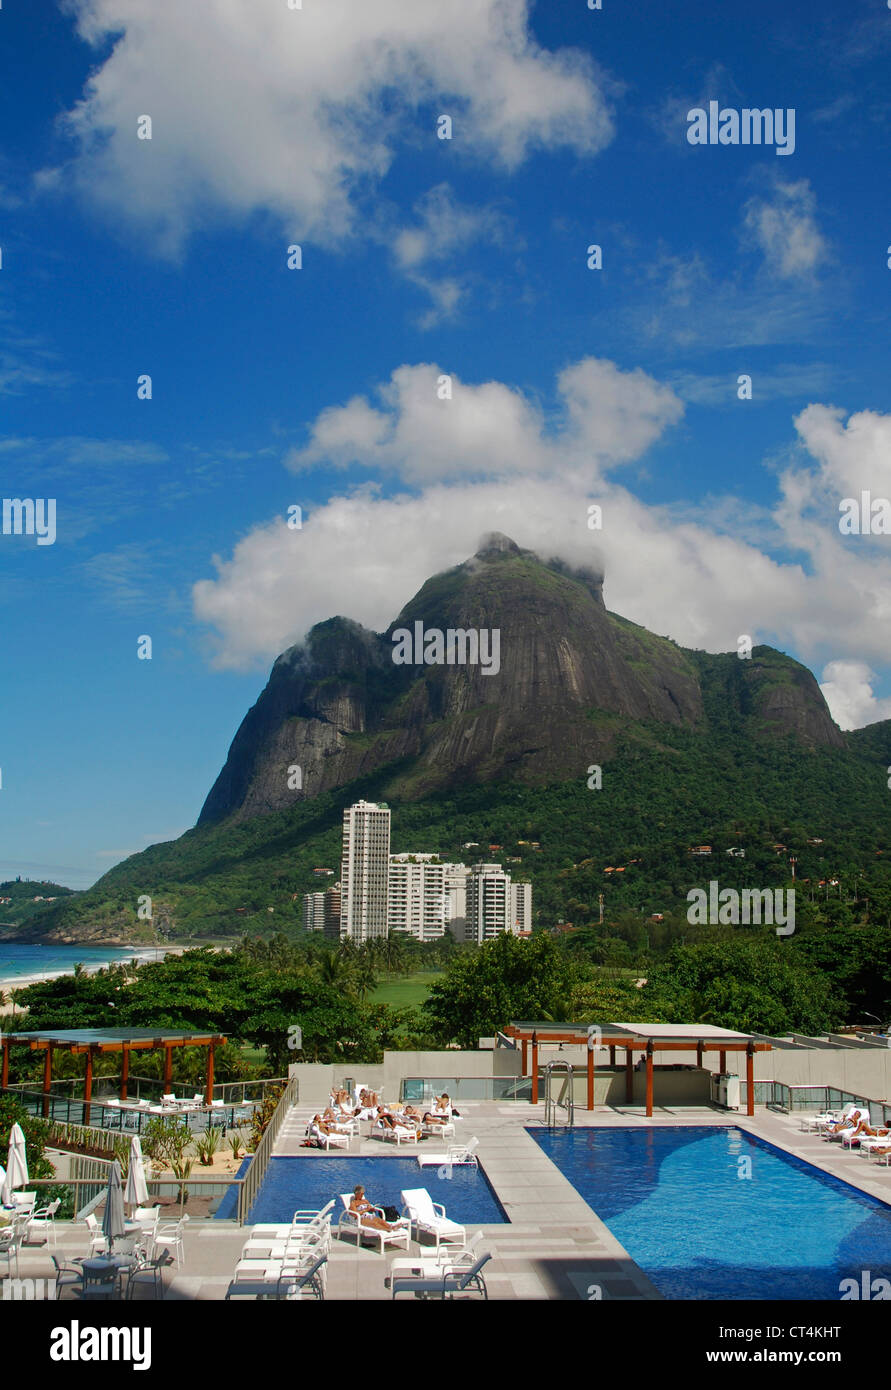 Brazil, Rio de Janeiro, Sao Conrado, view from Intercontinental Hotel on swimming pool and hills Stock Photo